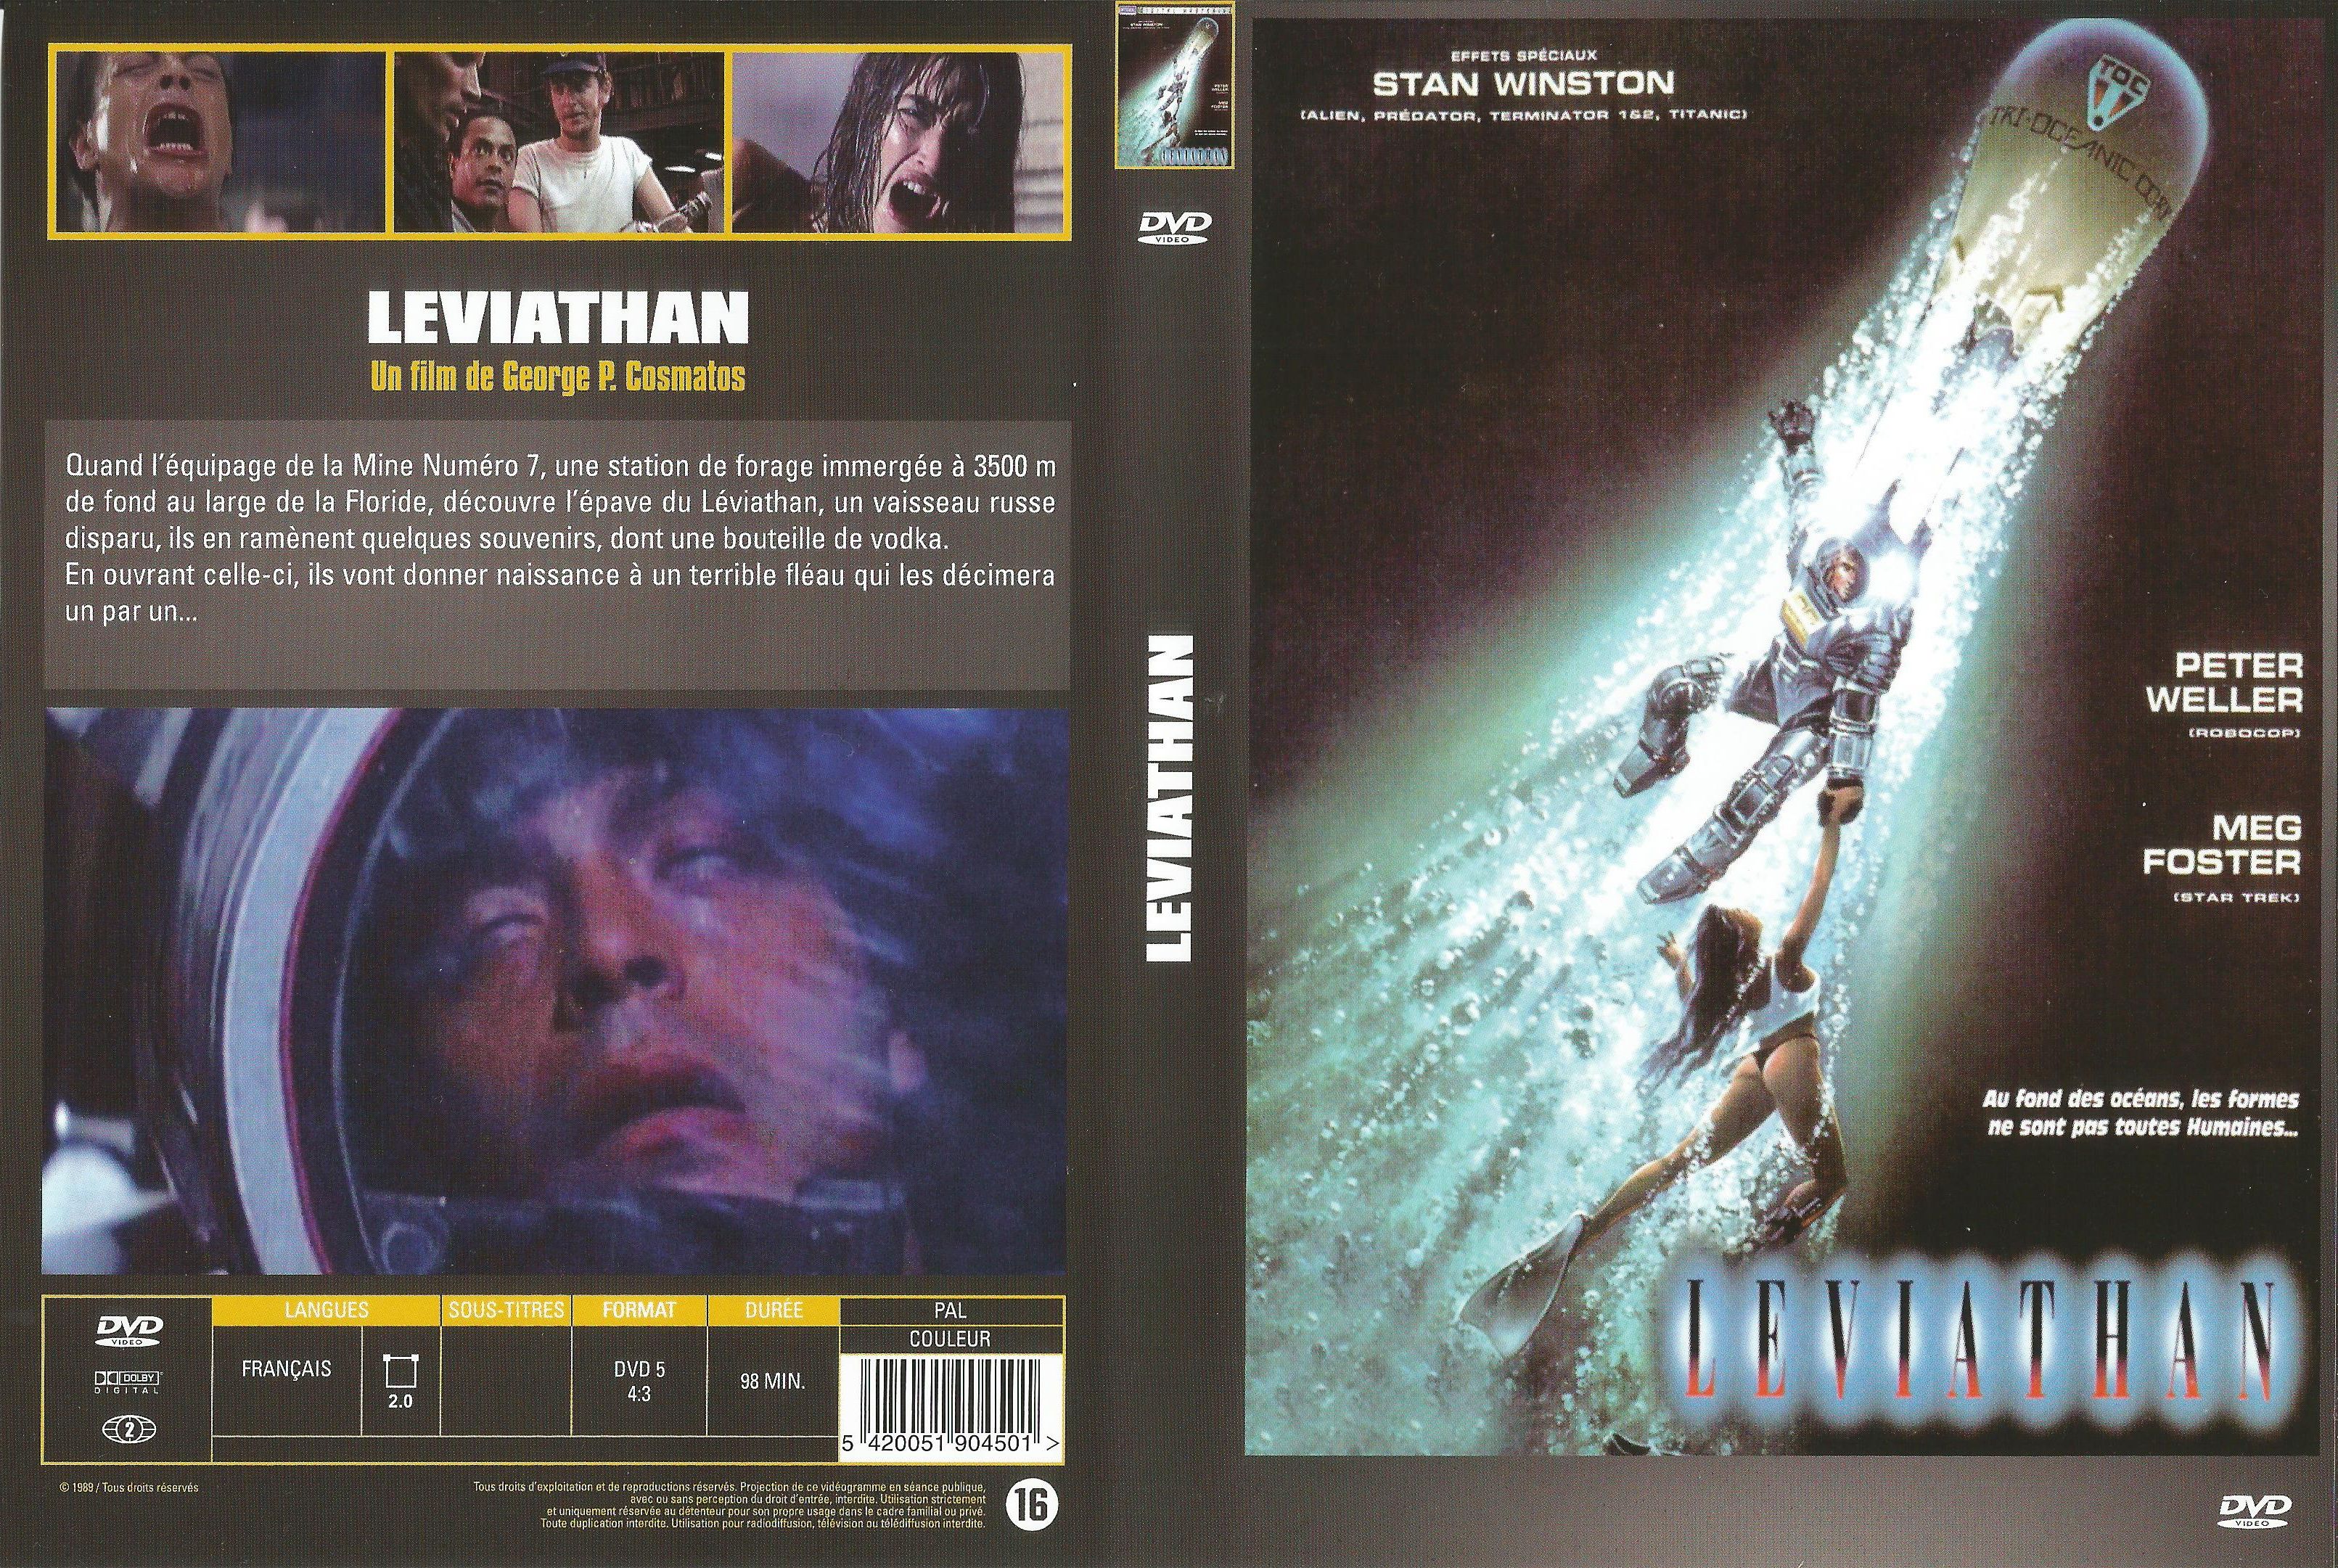 Jaquette DVD Leviathan v6